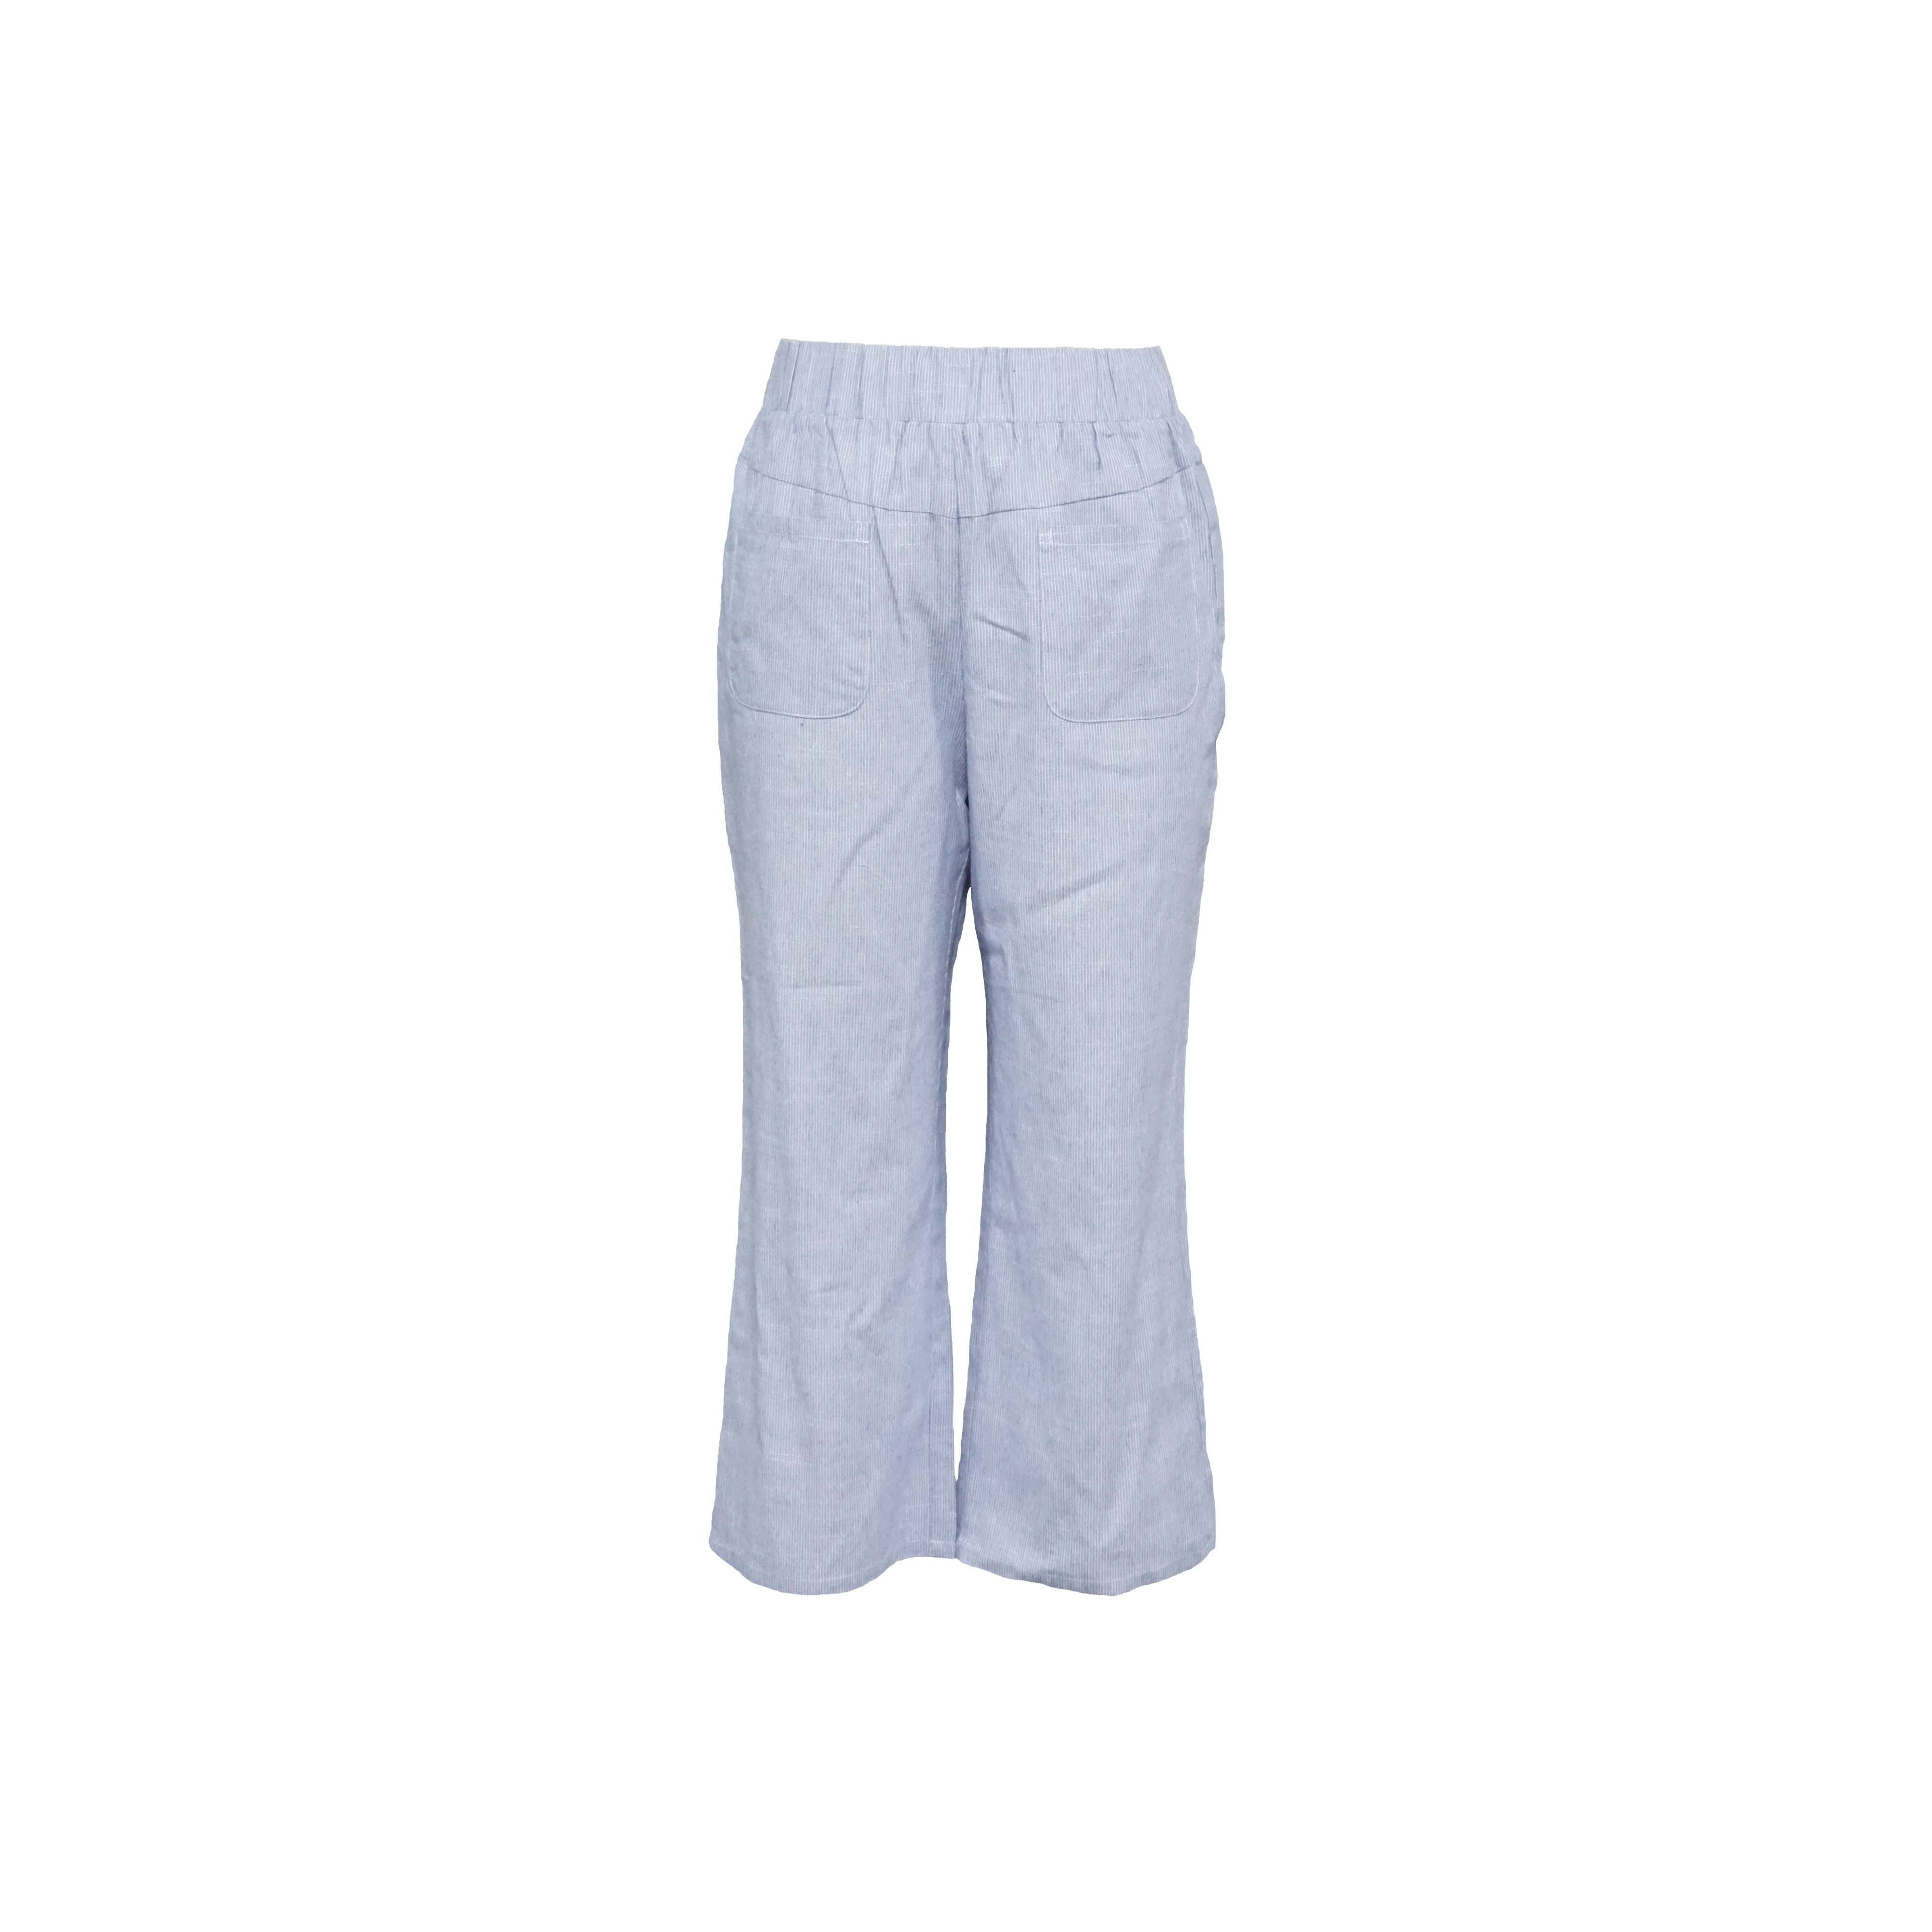 Pantalon droit bleu à fines rayures